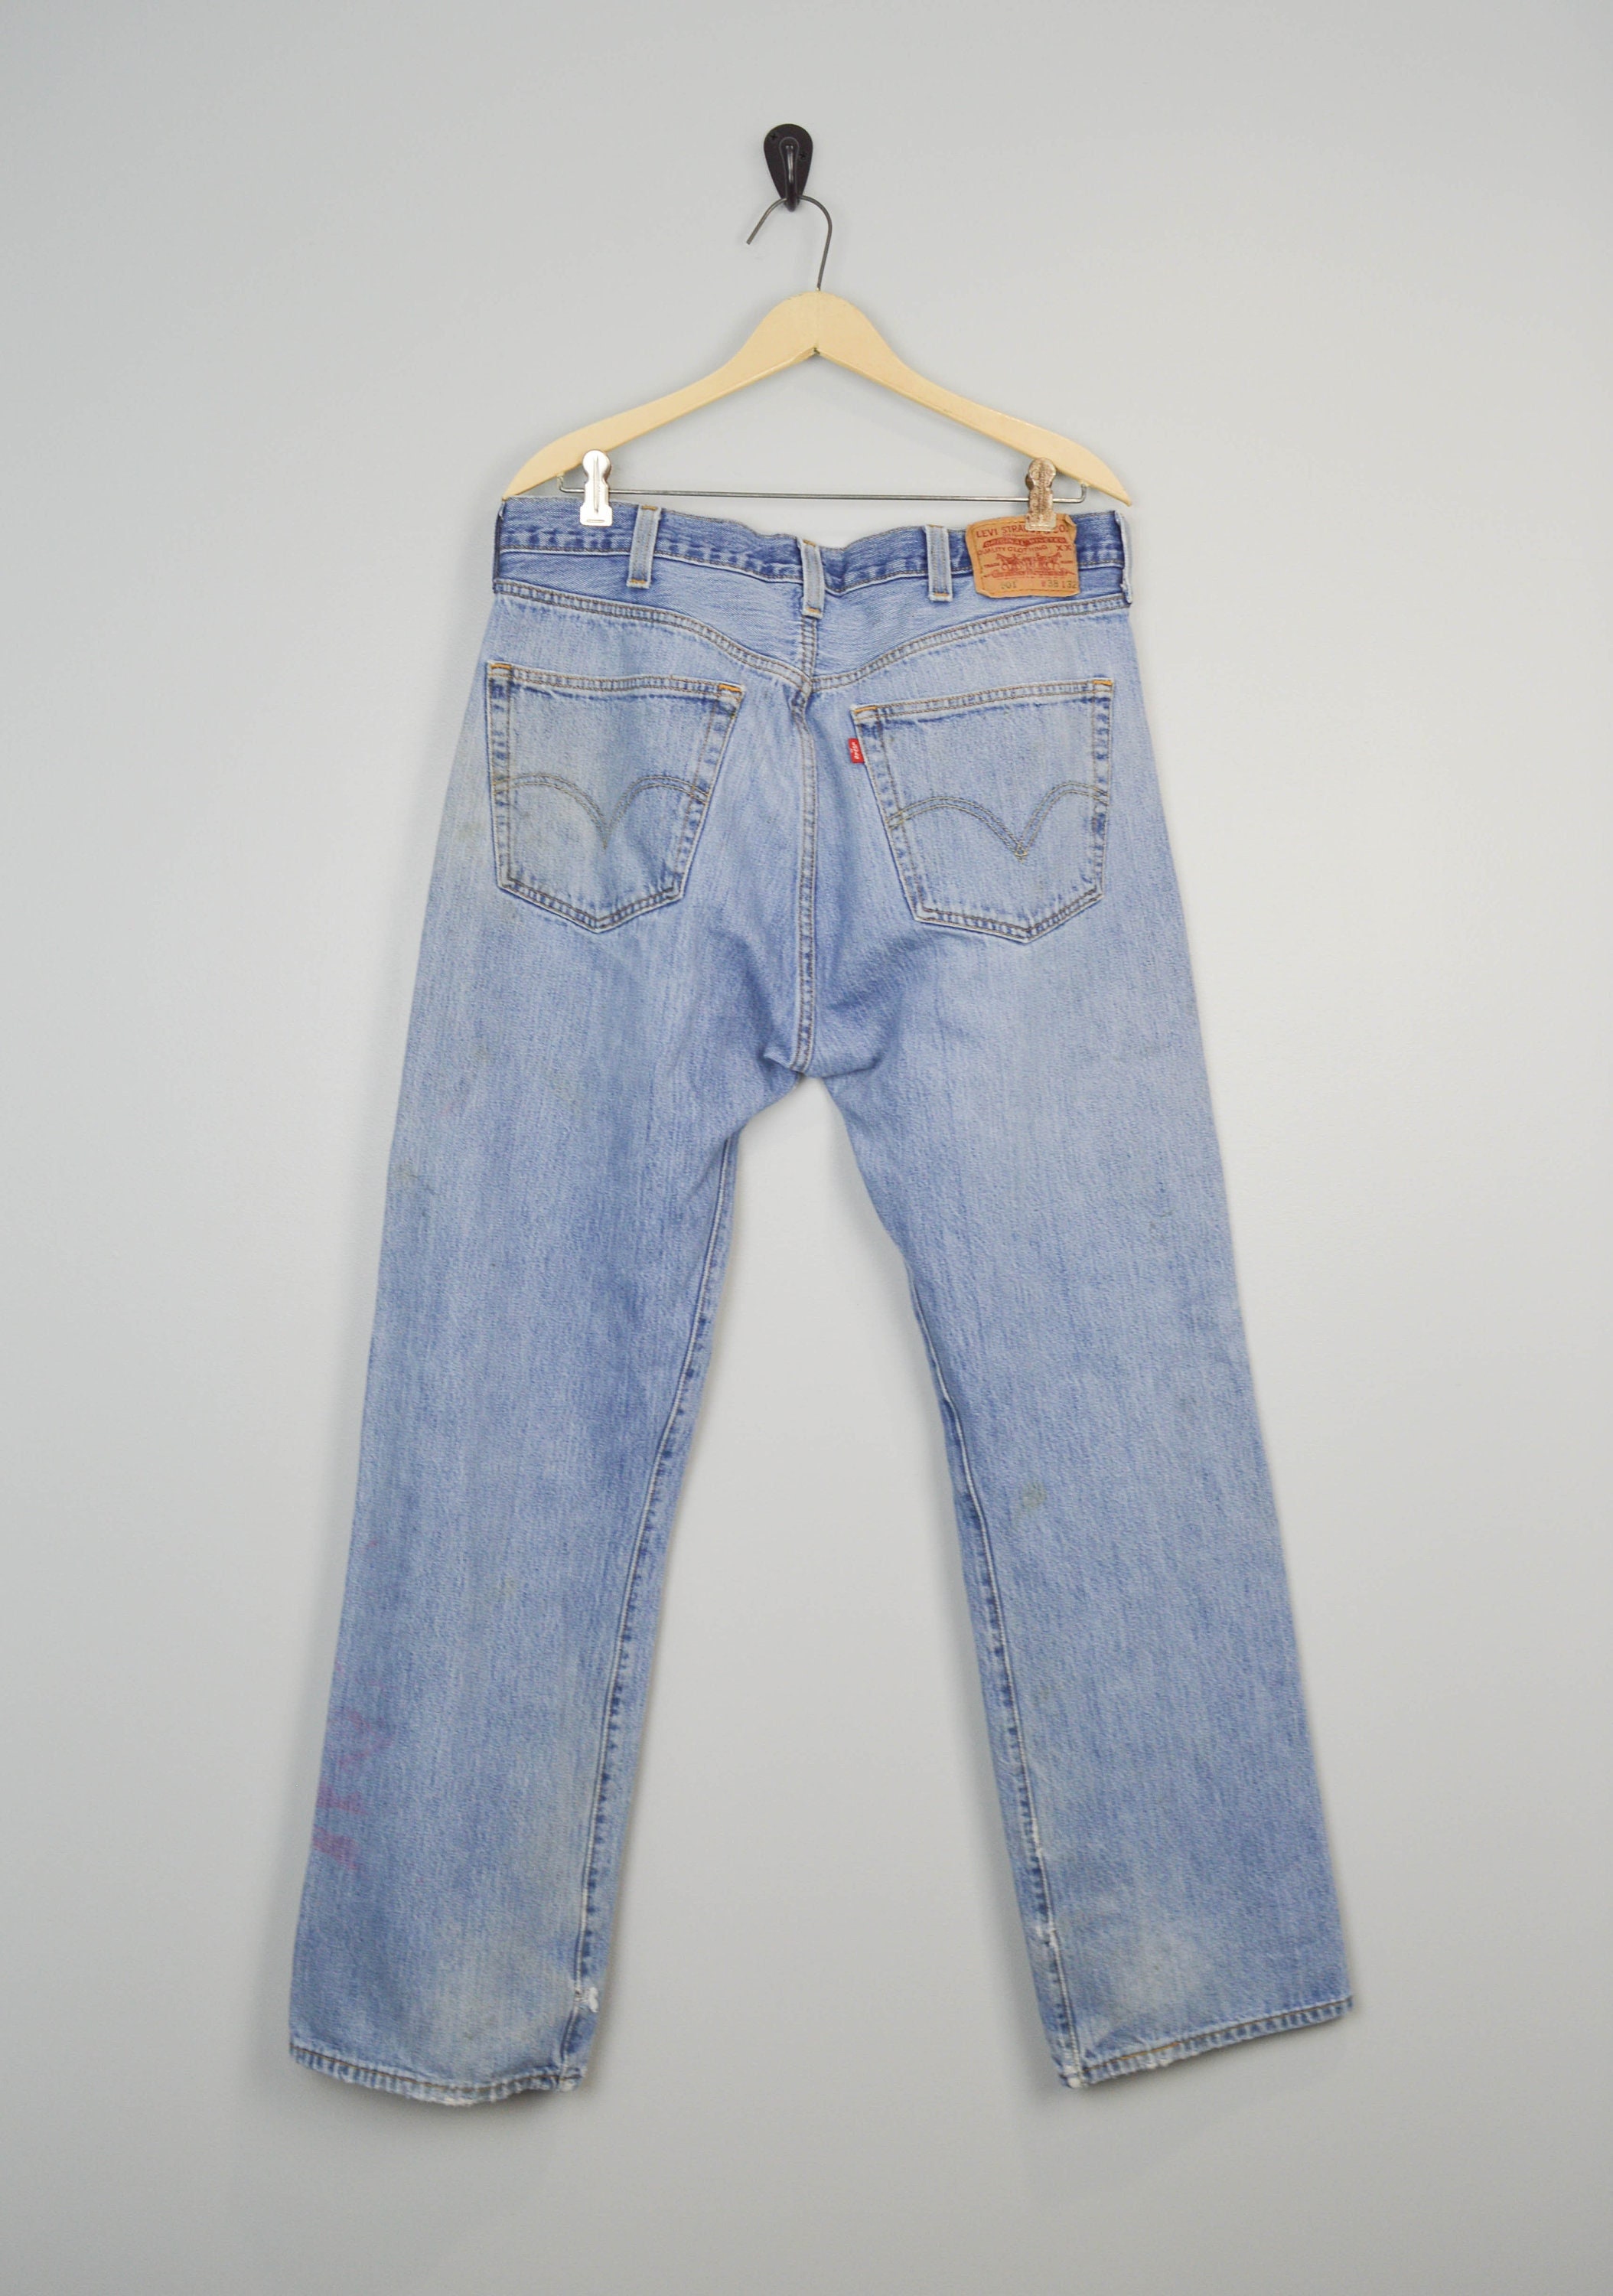 Kleding Gender-neutrale kleding volwassenen Jeans Maat 33x28 Levi's 501 GERONIMA Button Fly Jeans Faded Mid Wash Distressed Dirty Levi's Denim Distressed Jeans Levis #J08 